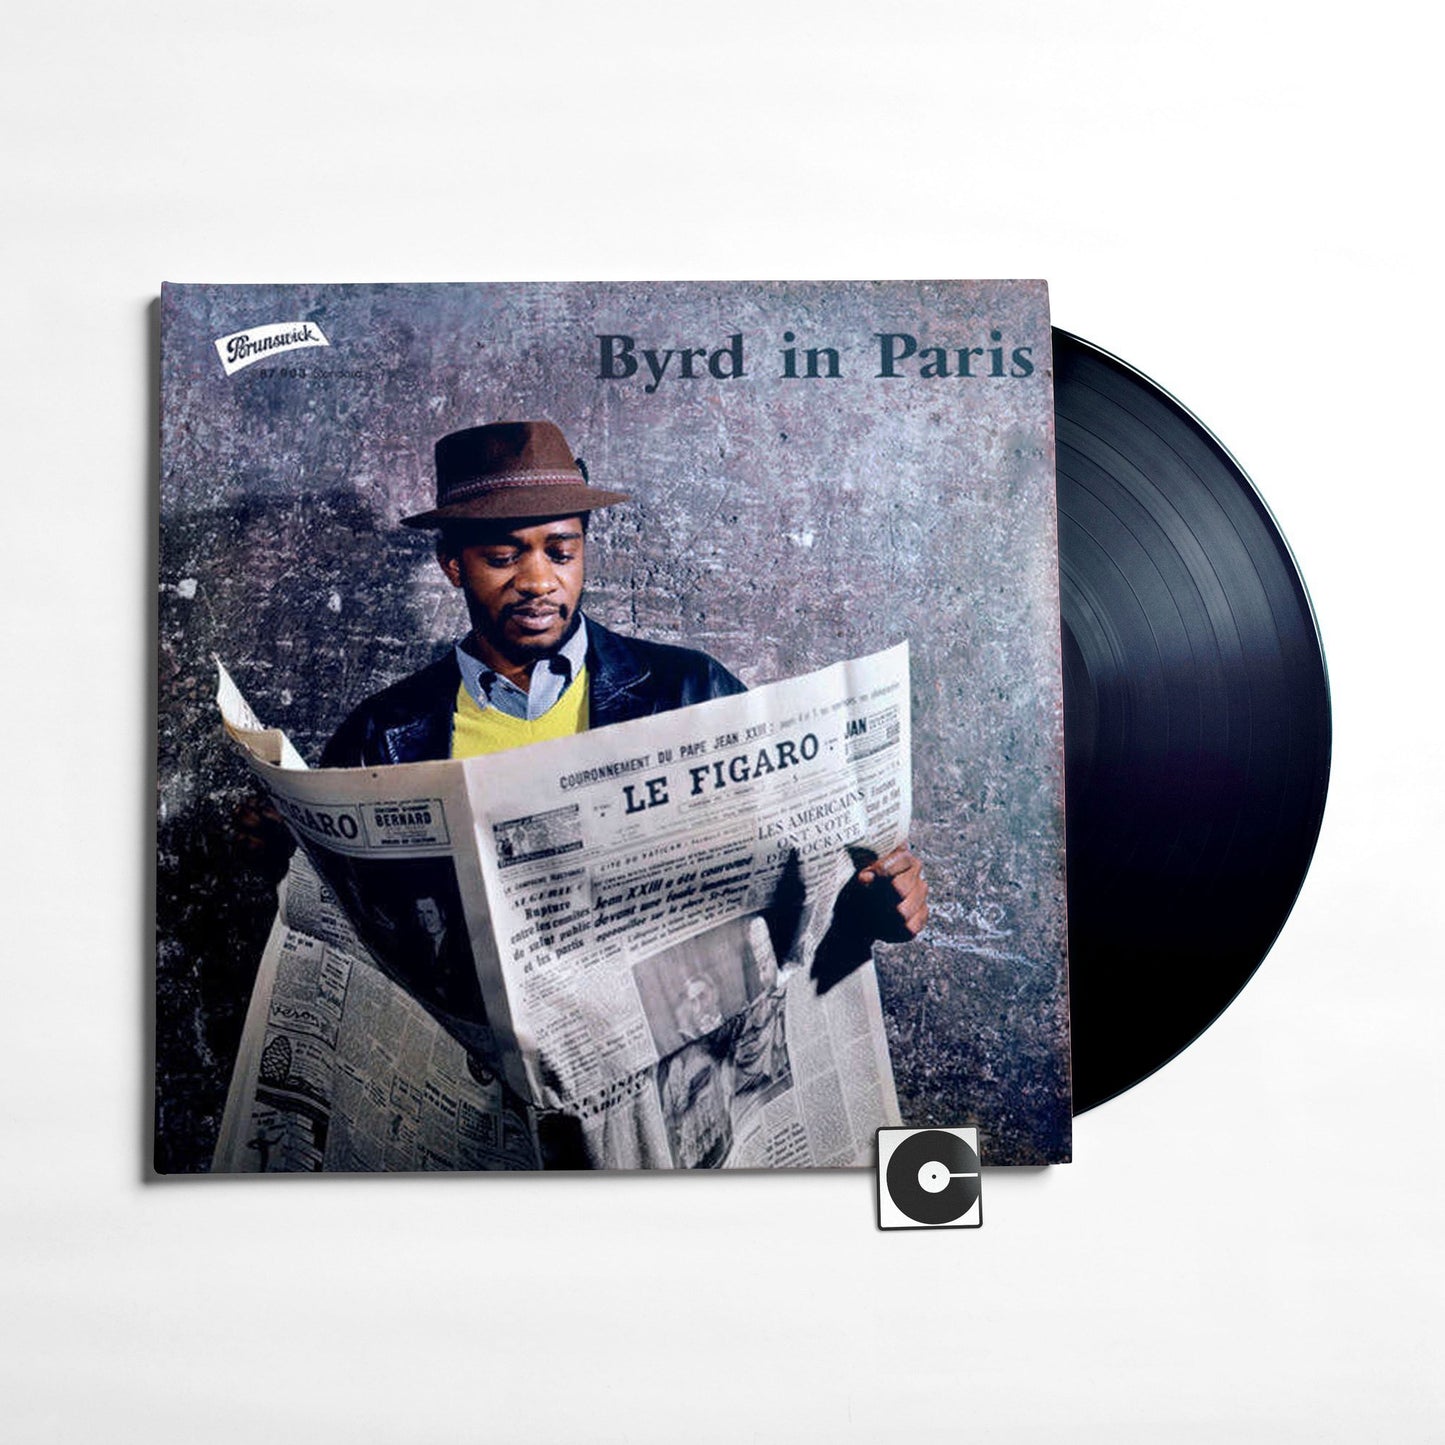 Donald Byrd - "Byrd In Paris" Sam Records